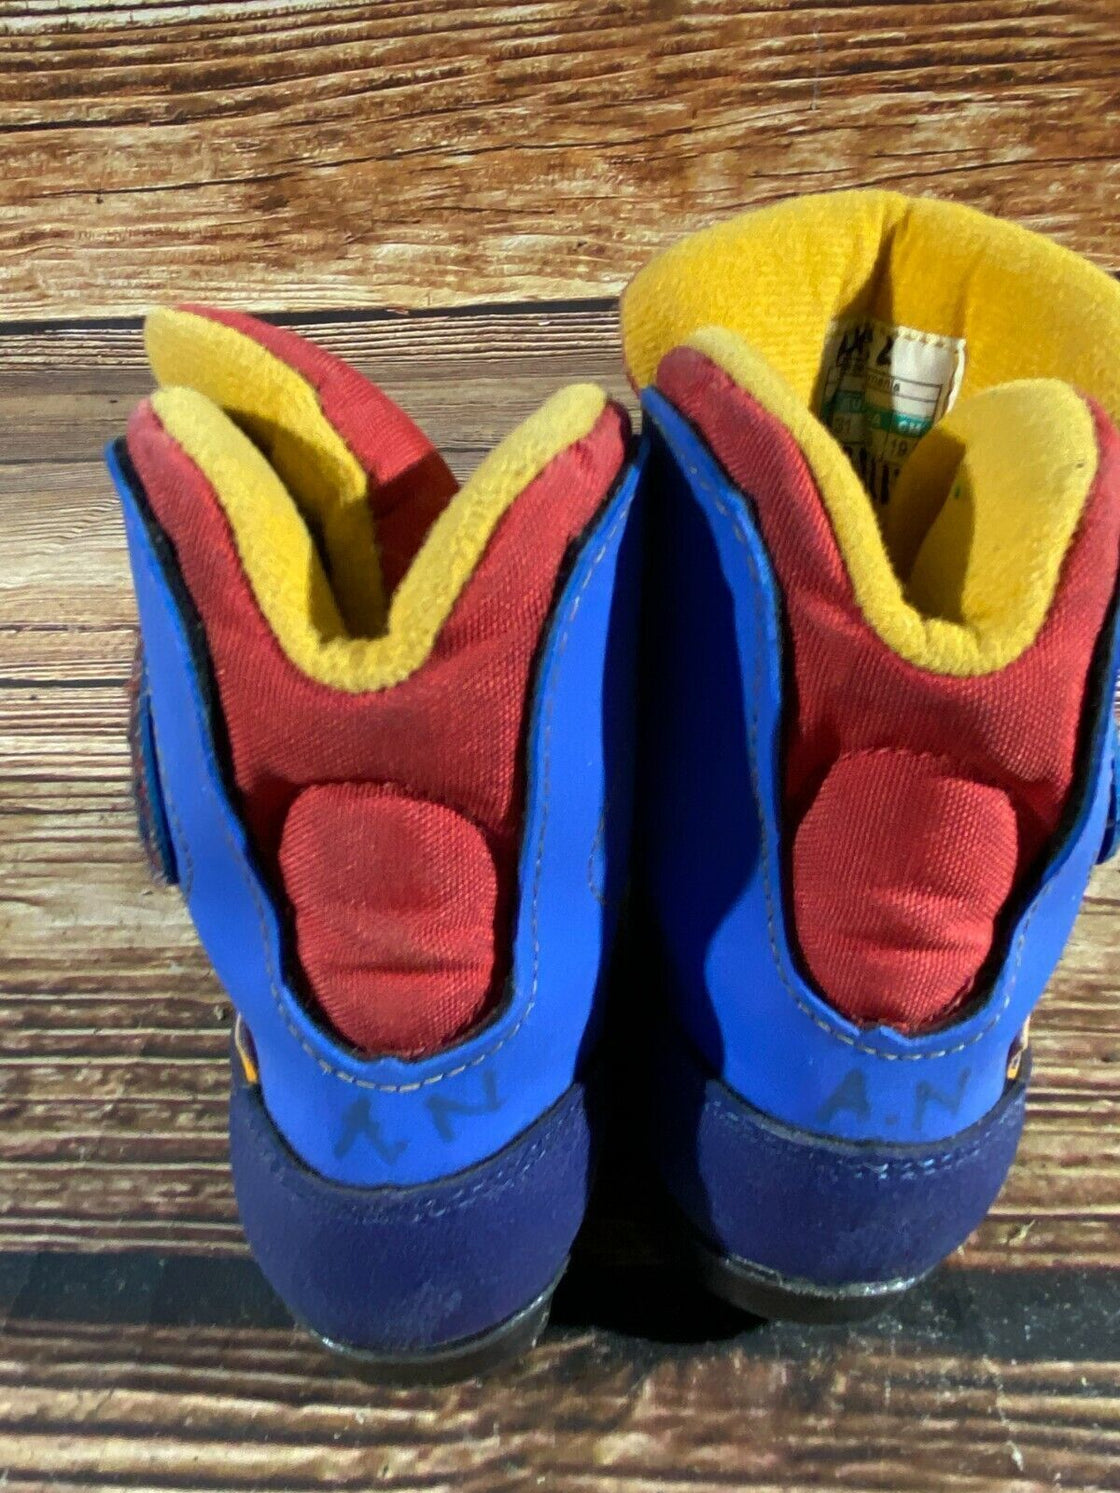 SALOMON Kids Nordic Cross Country Ski Boots Size EU31 US13 SNS S-2